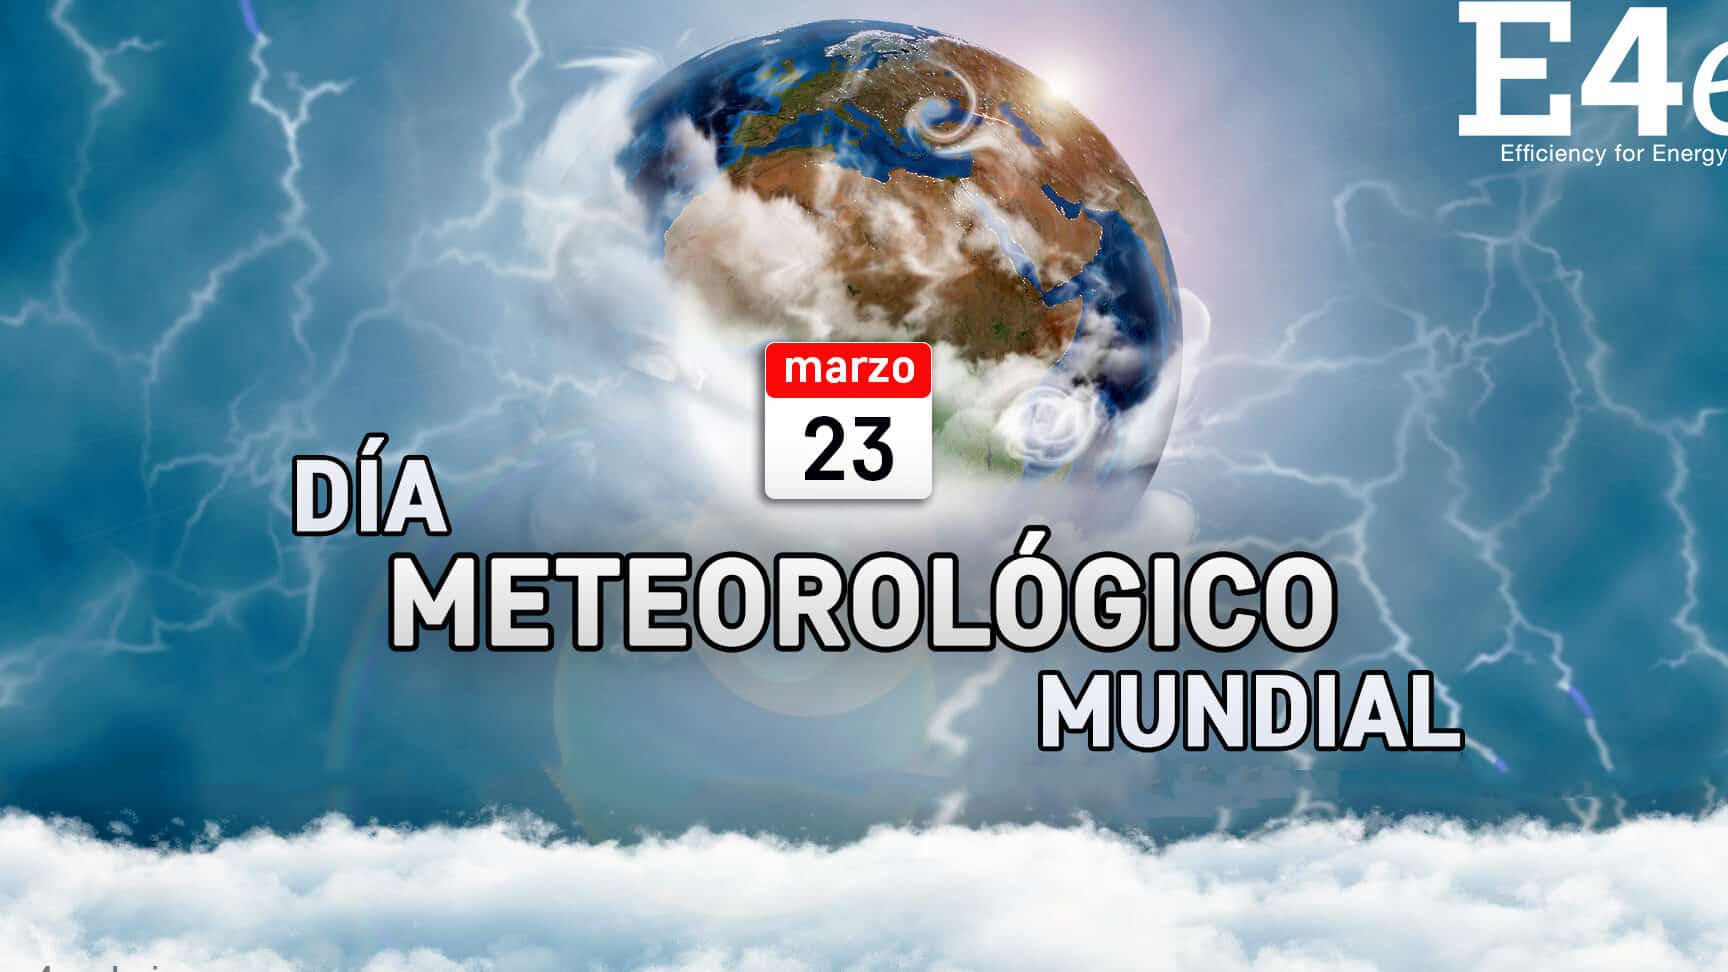 dia meteorologico mundial 23 de marzo